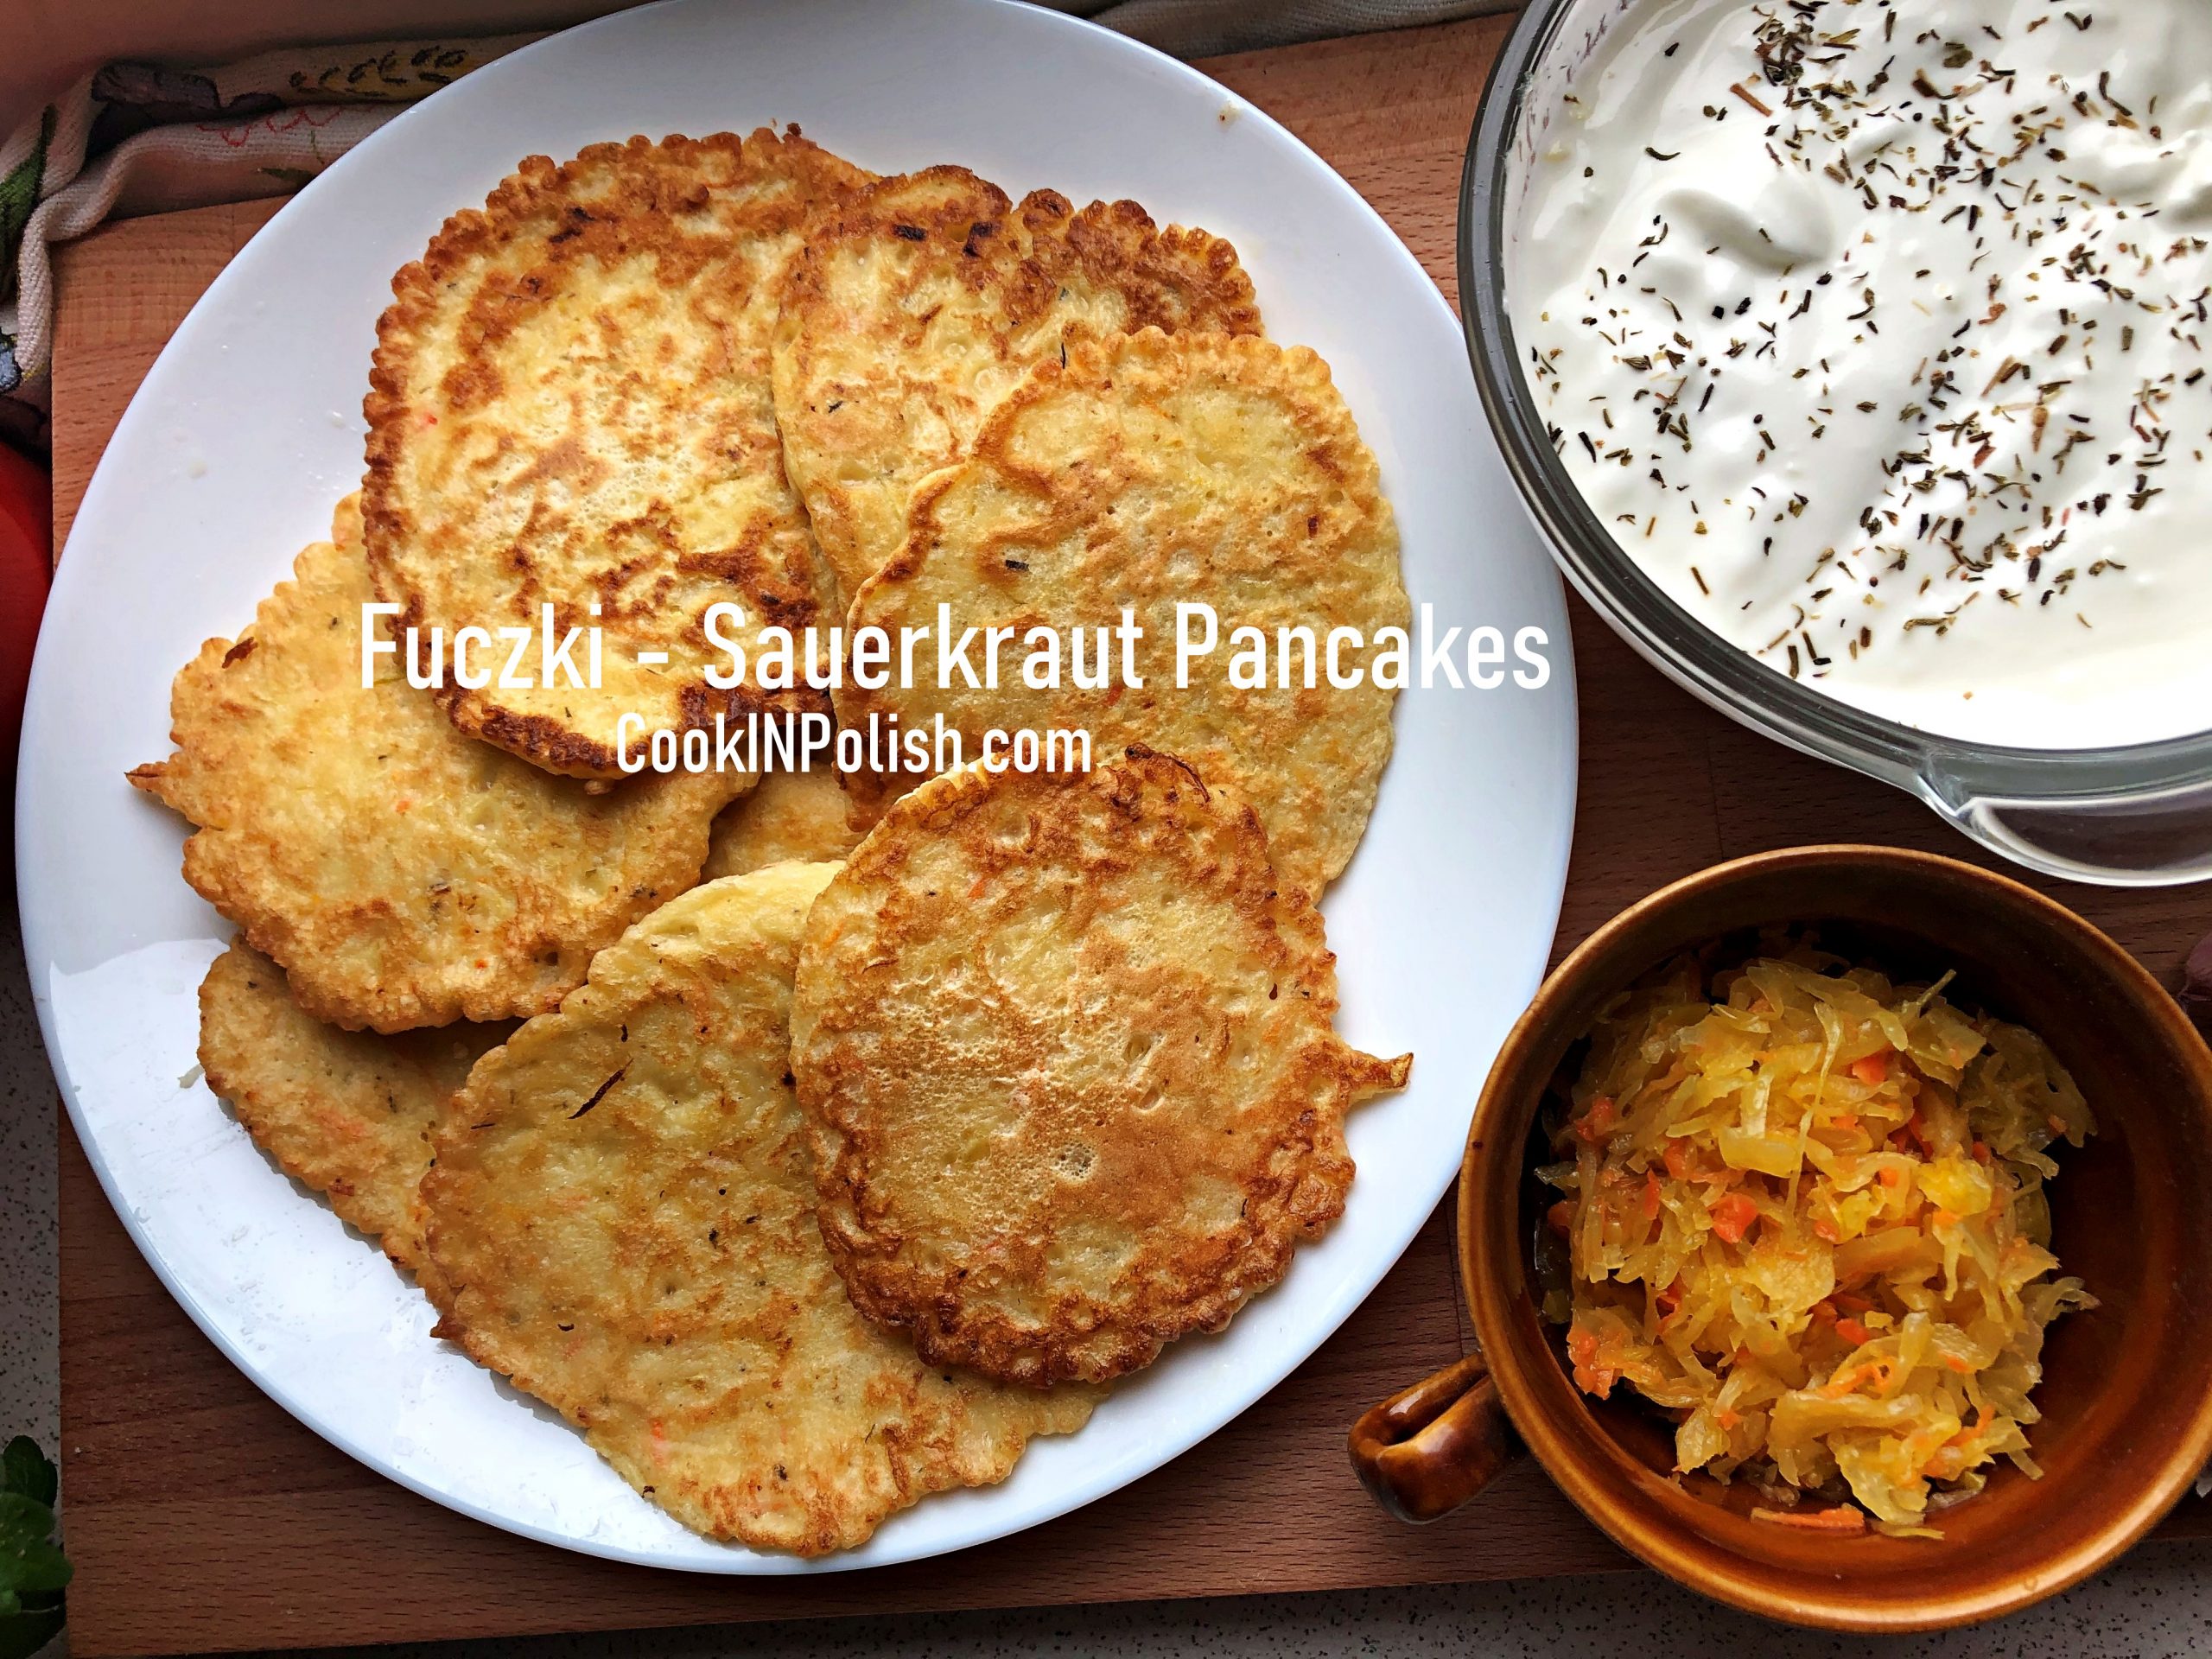 Fuczki - Sauerkraut Pancakes